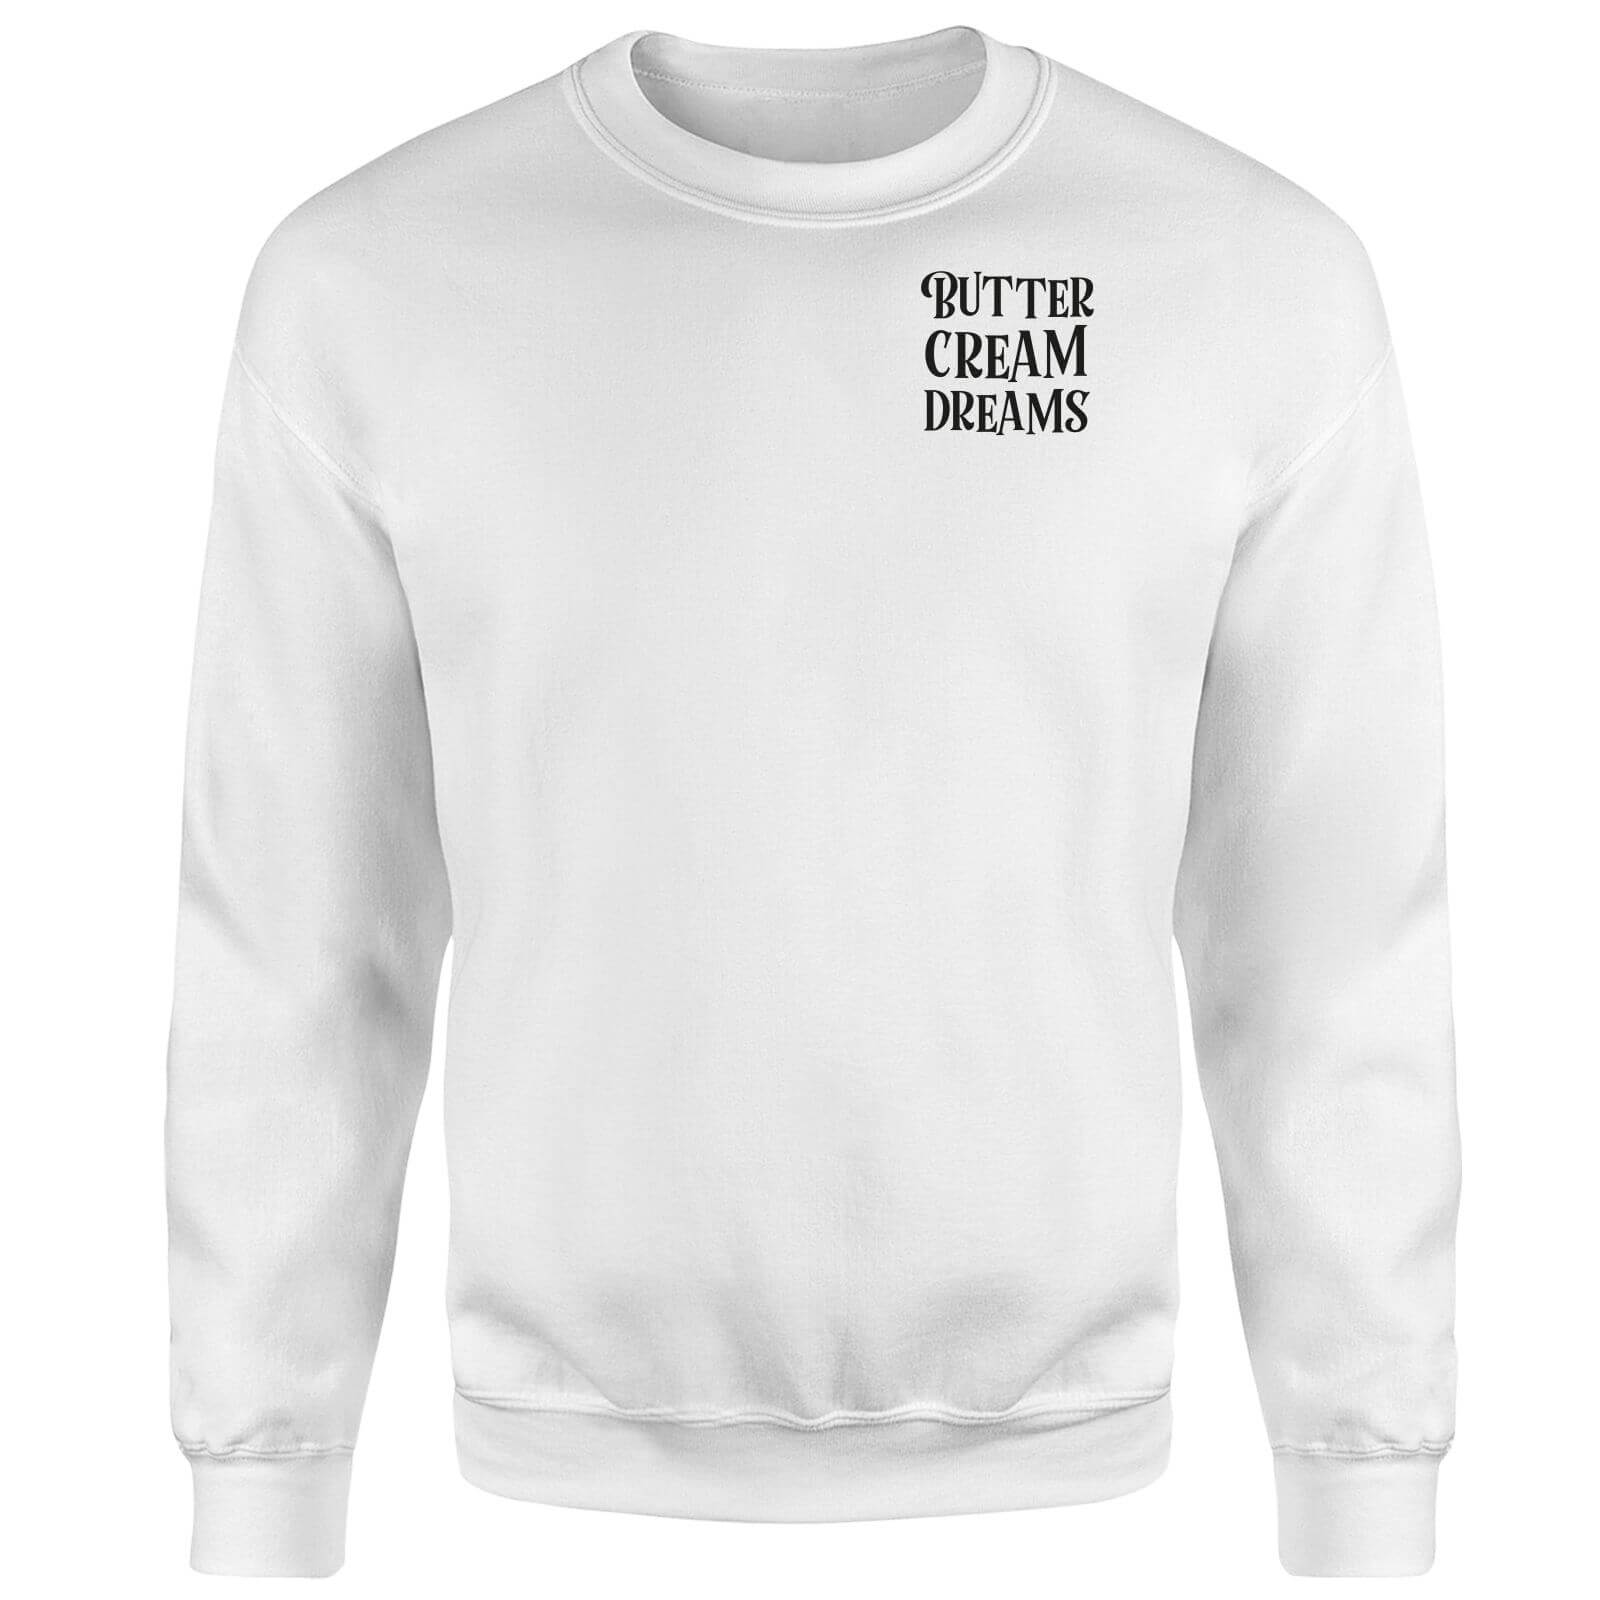 Buttercream Dreams Sweatshirt - White - XXL - White